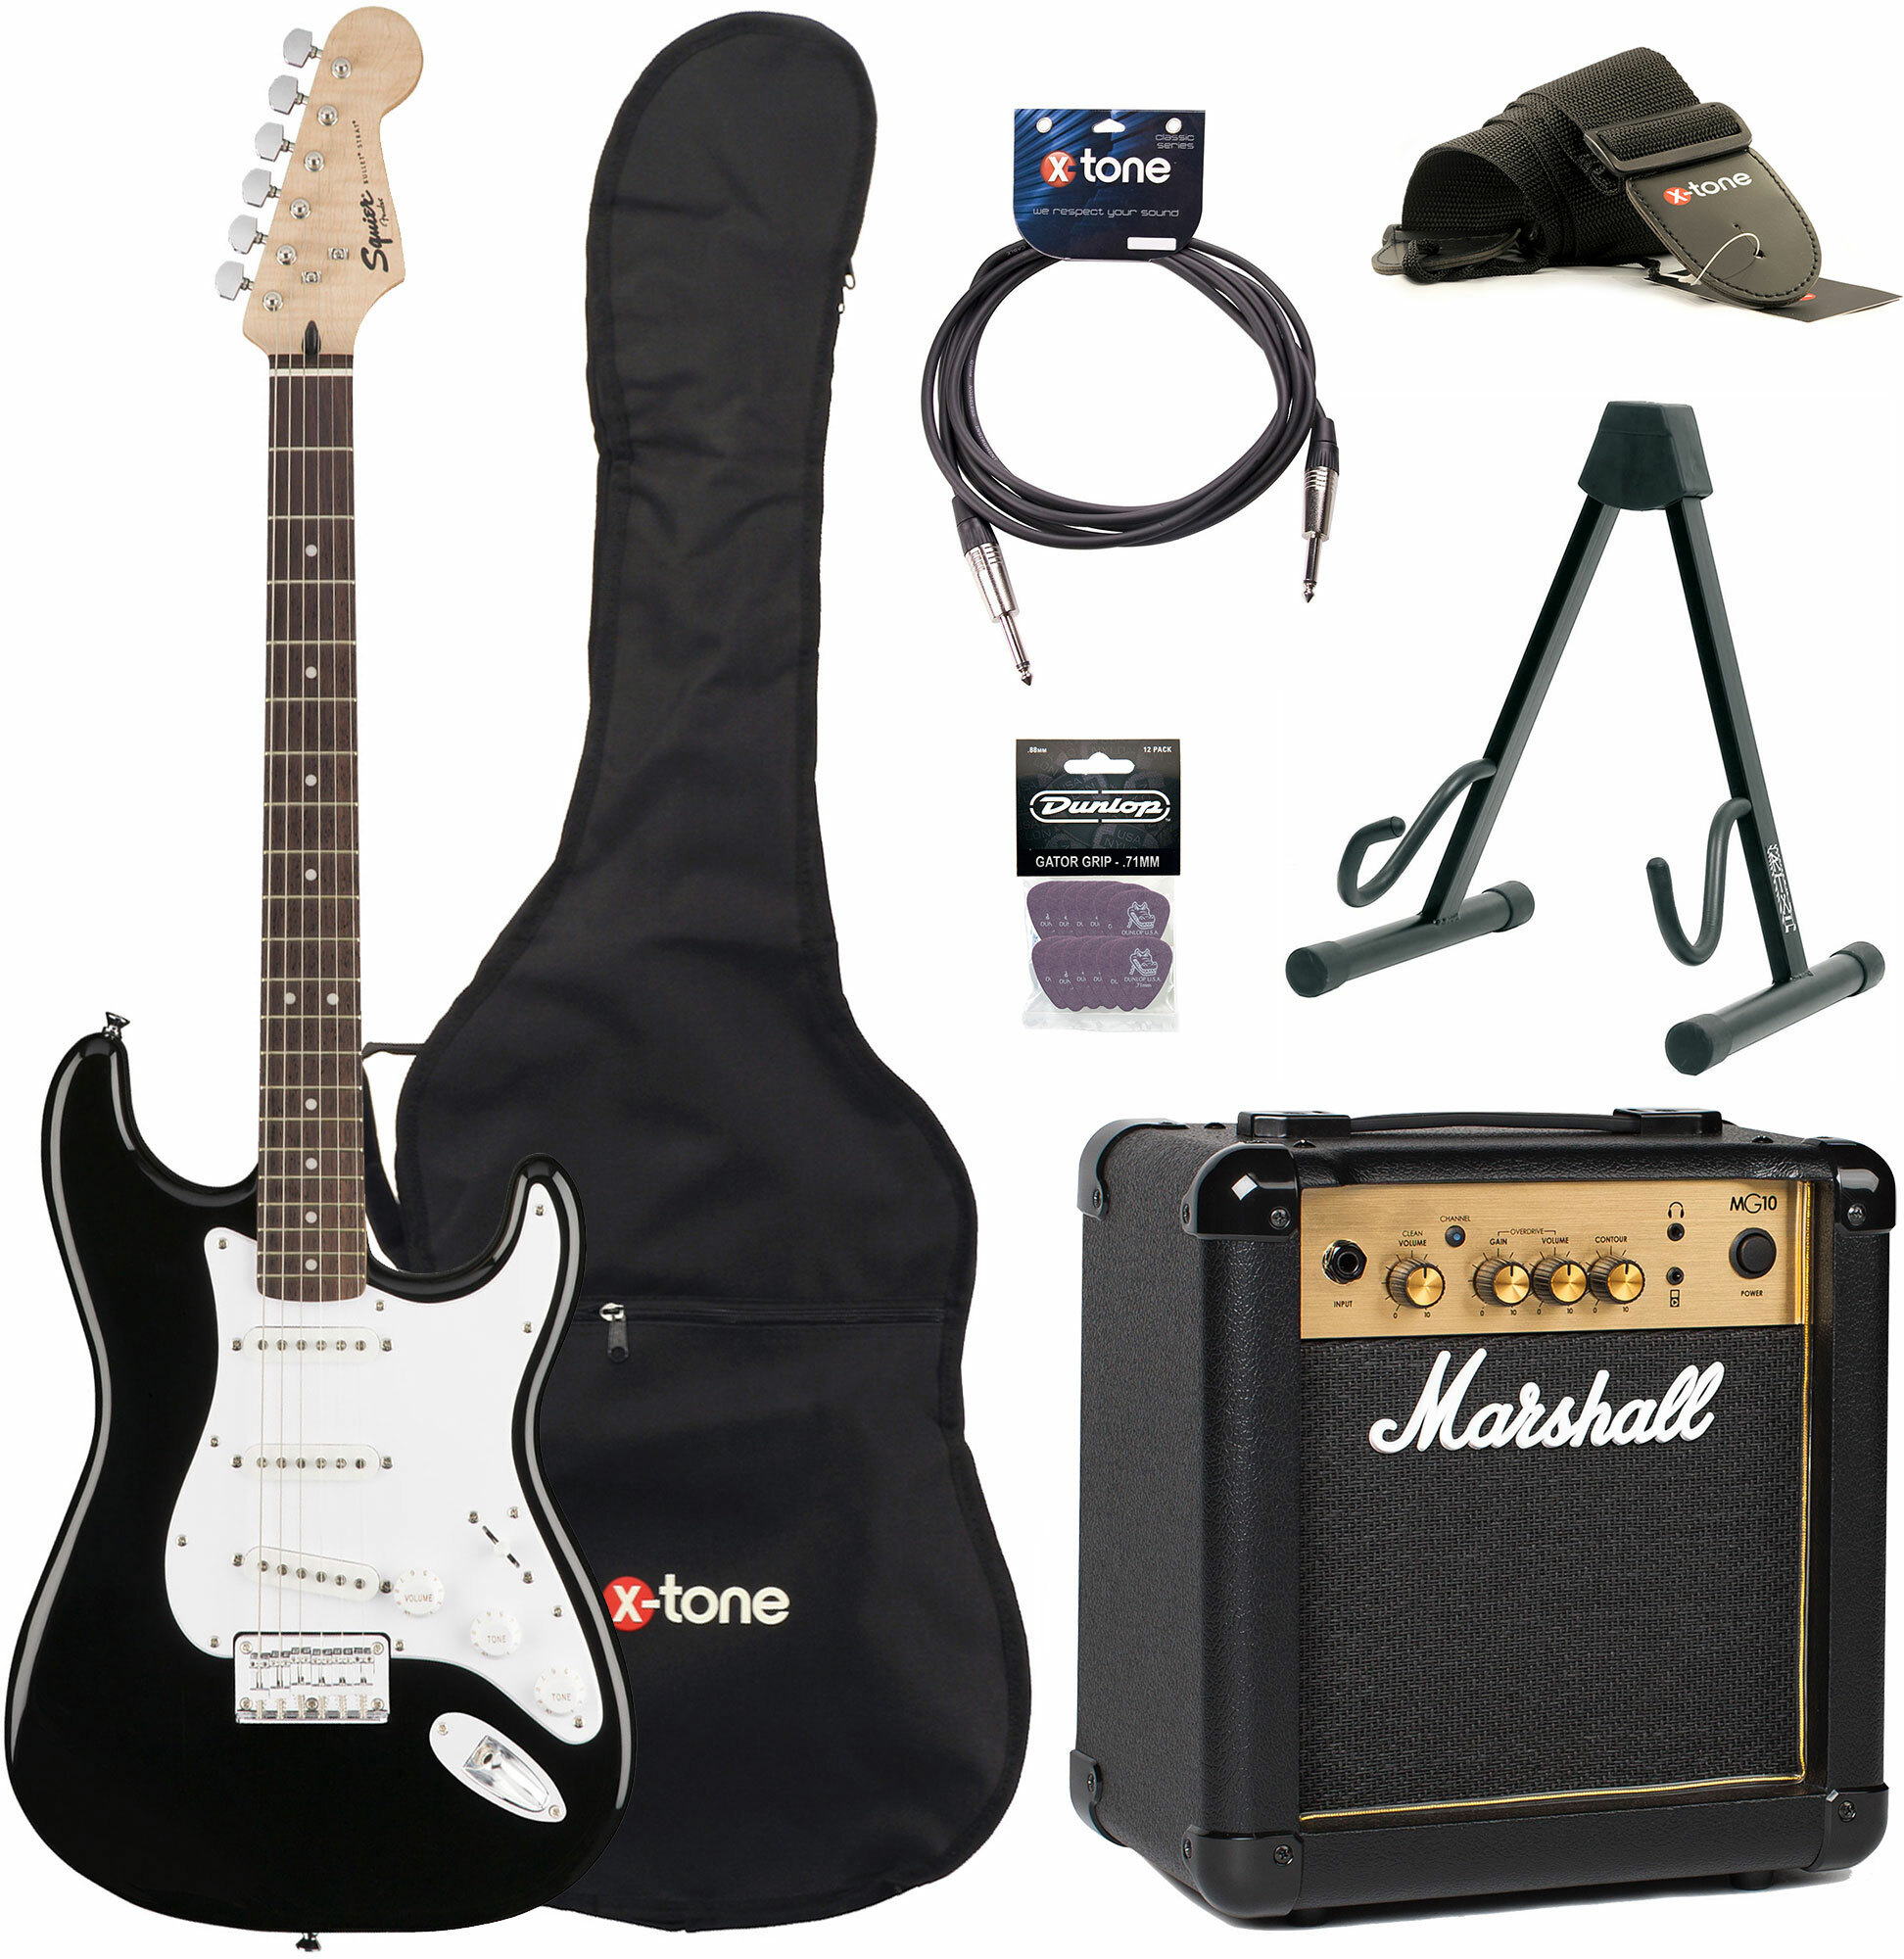 Squier Strat Bullet Ht Hss + Marshall Mg10g + X-tone Access - Black - Elektrische gitaar set - Main picture